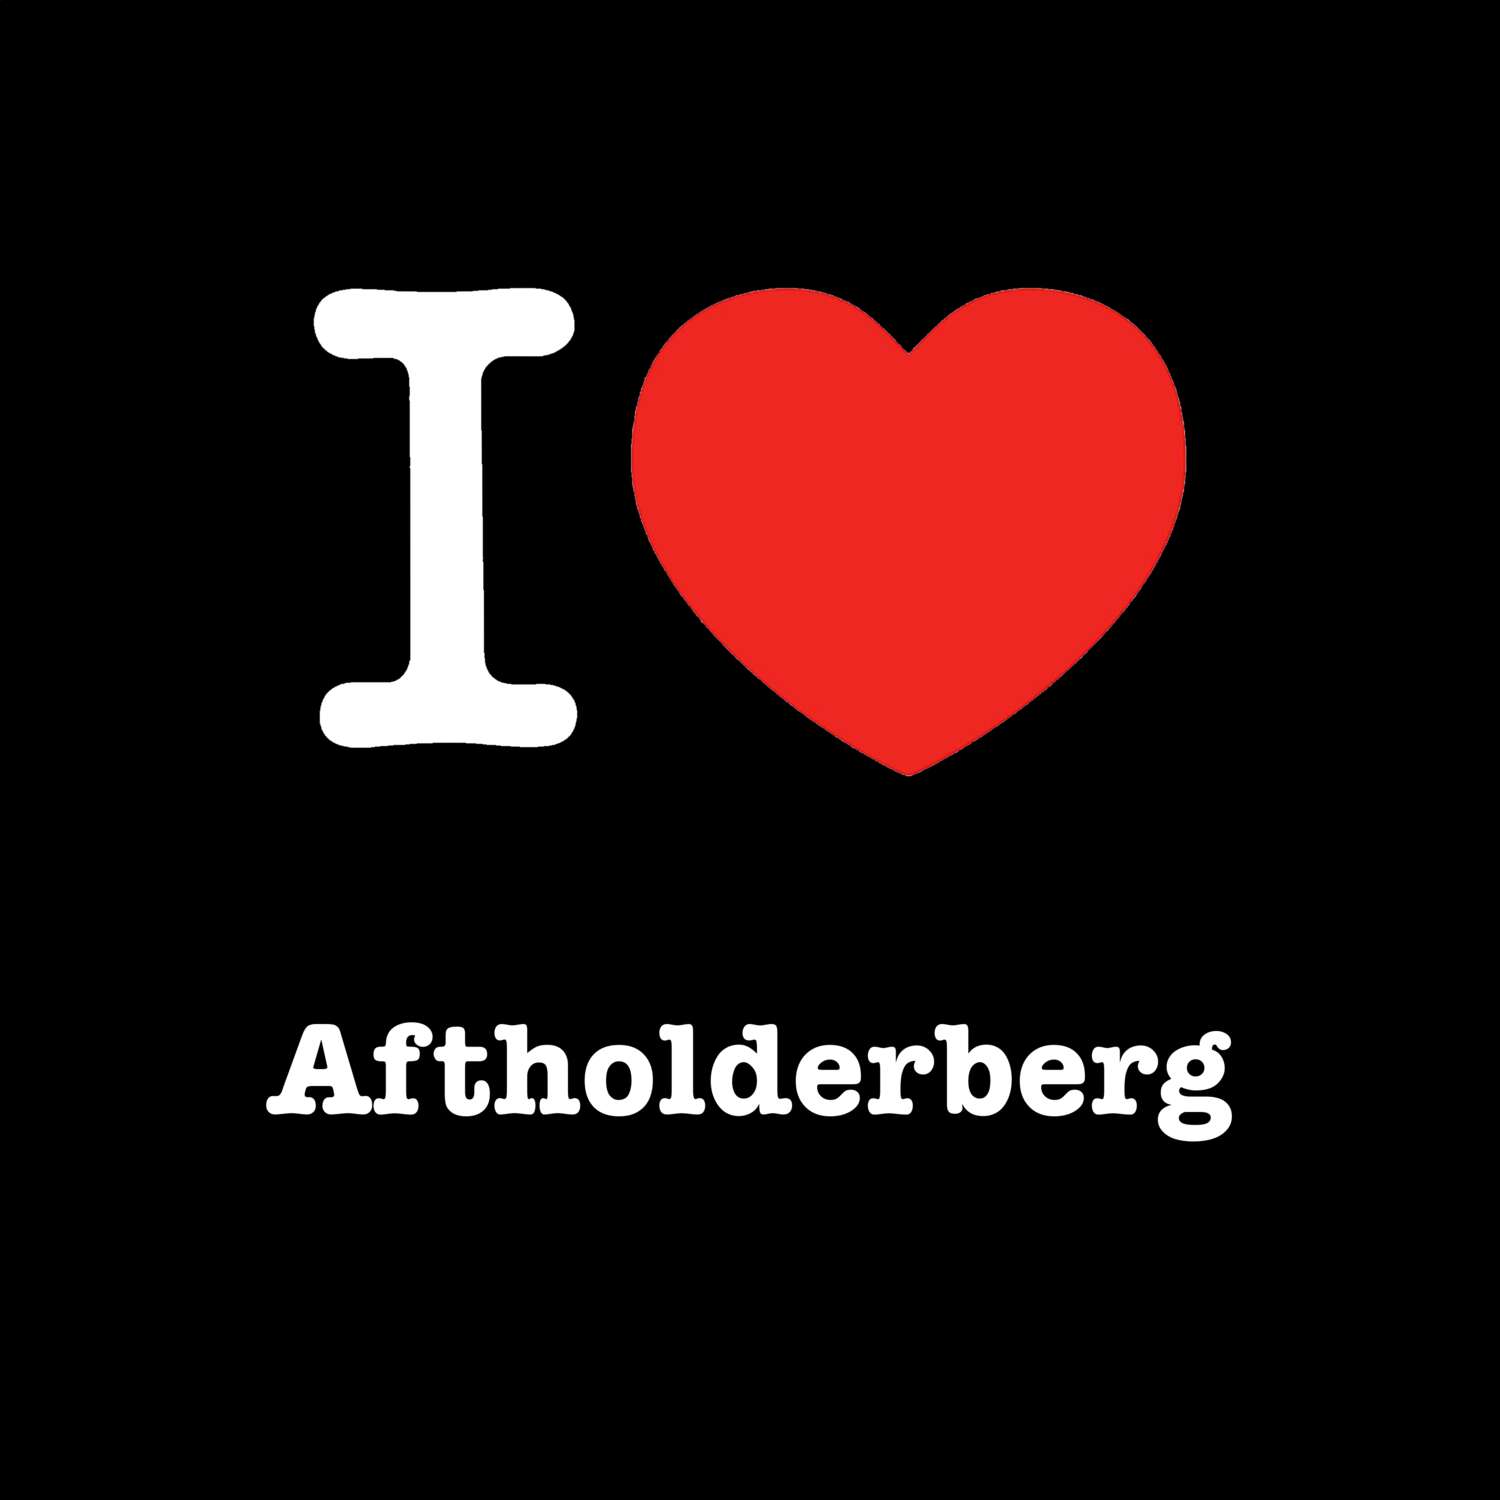 Aftholderberg T-Shirt »I love«